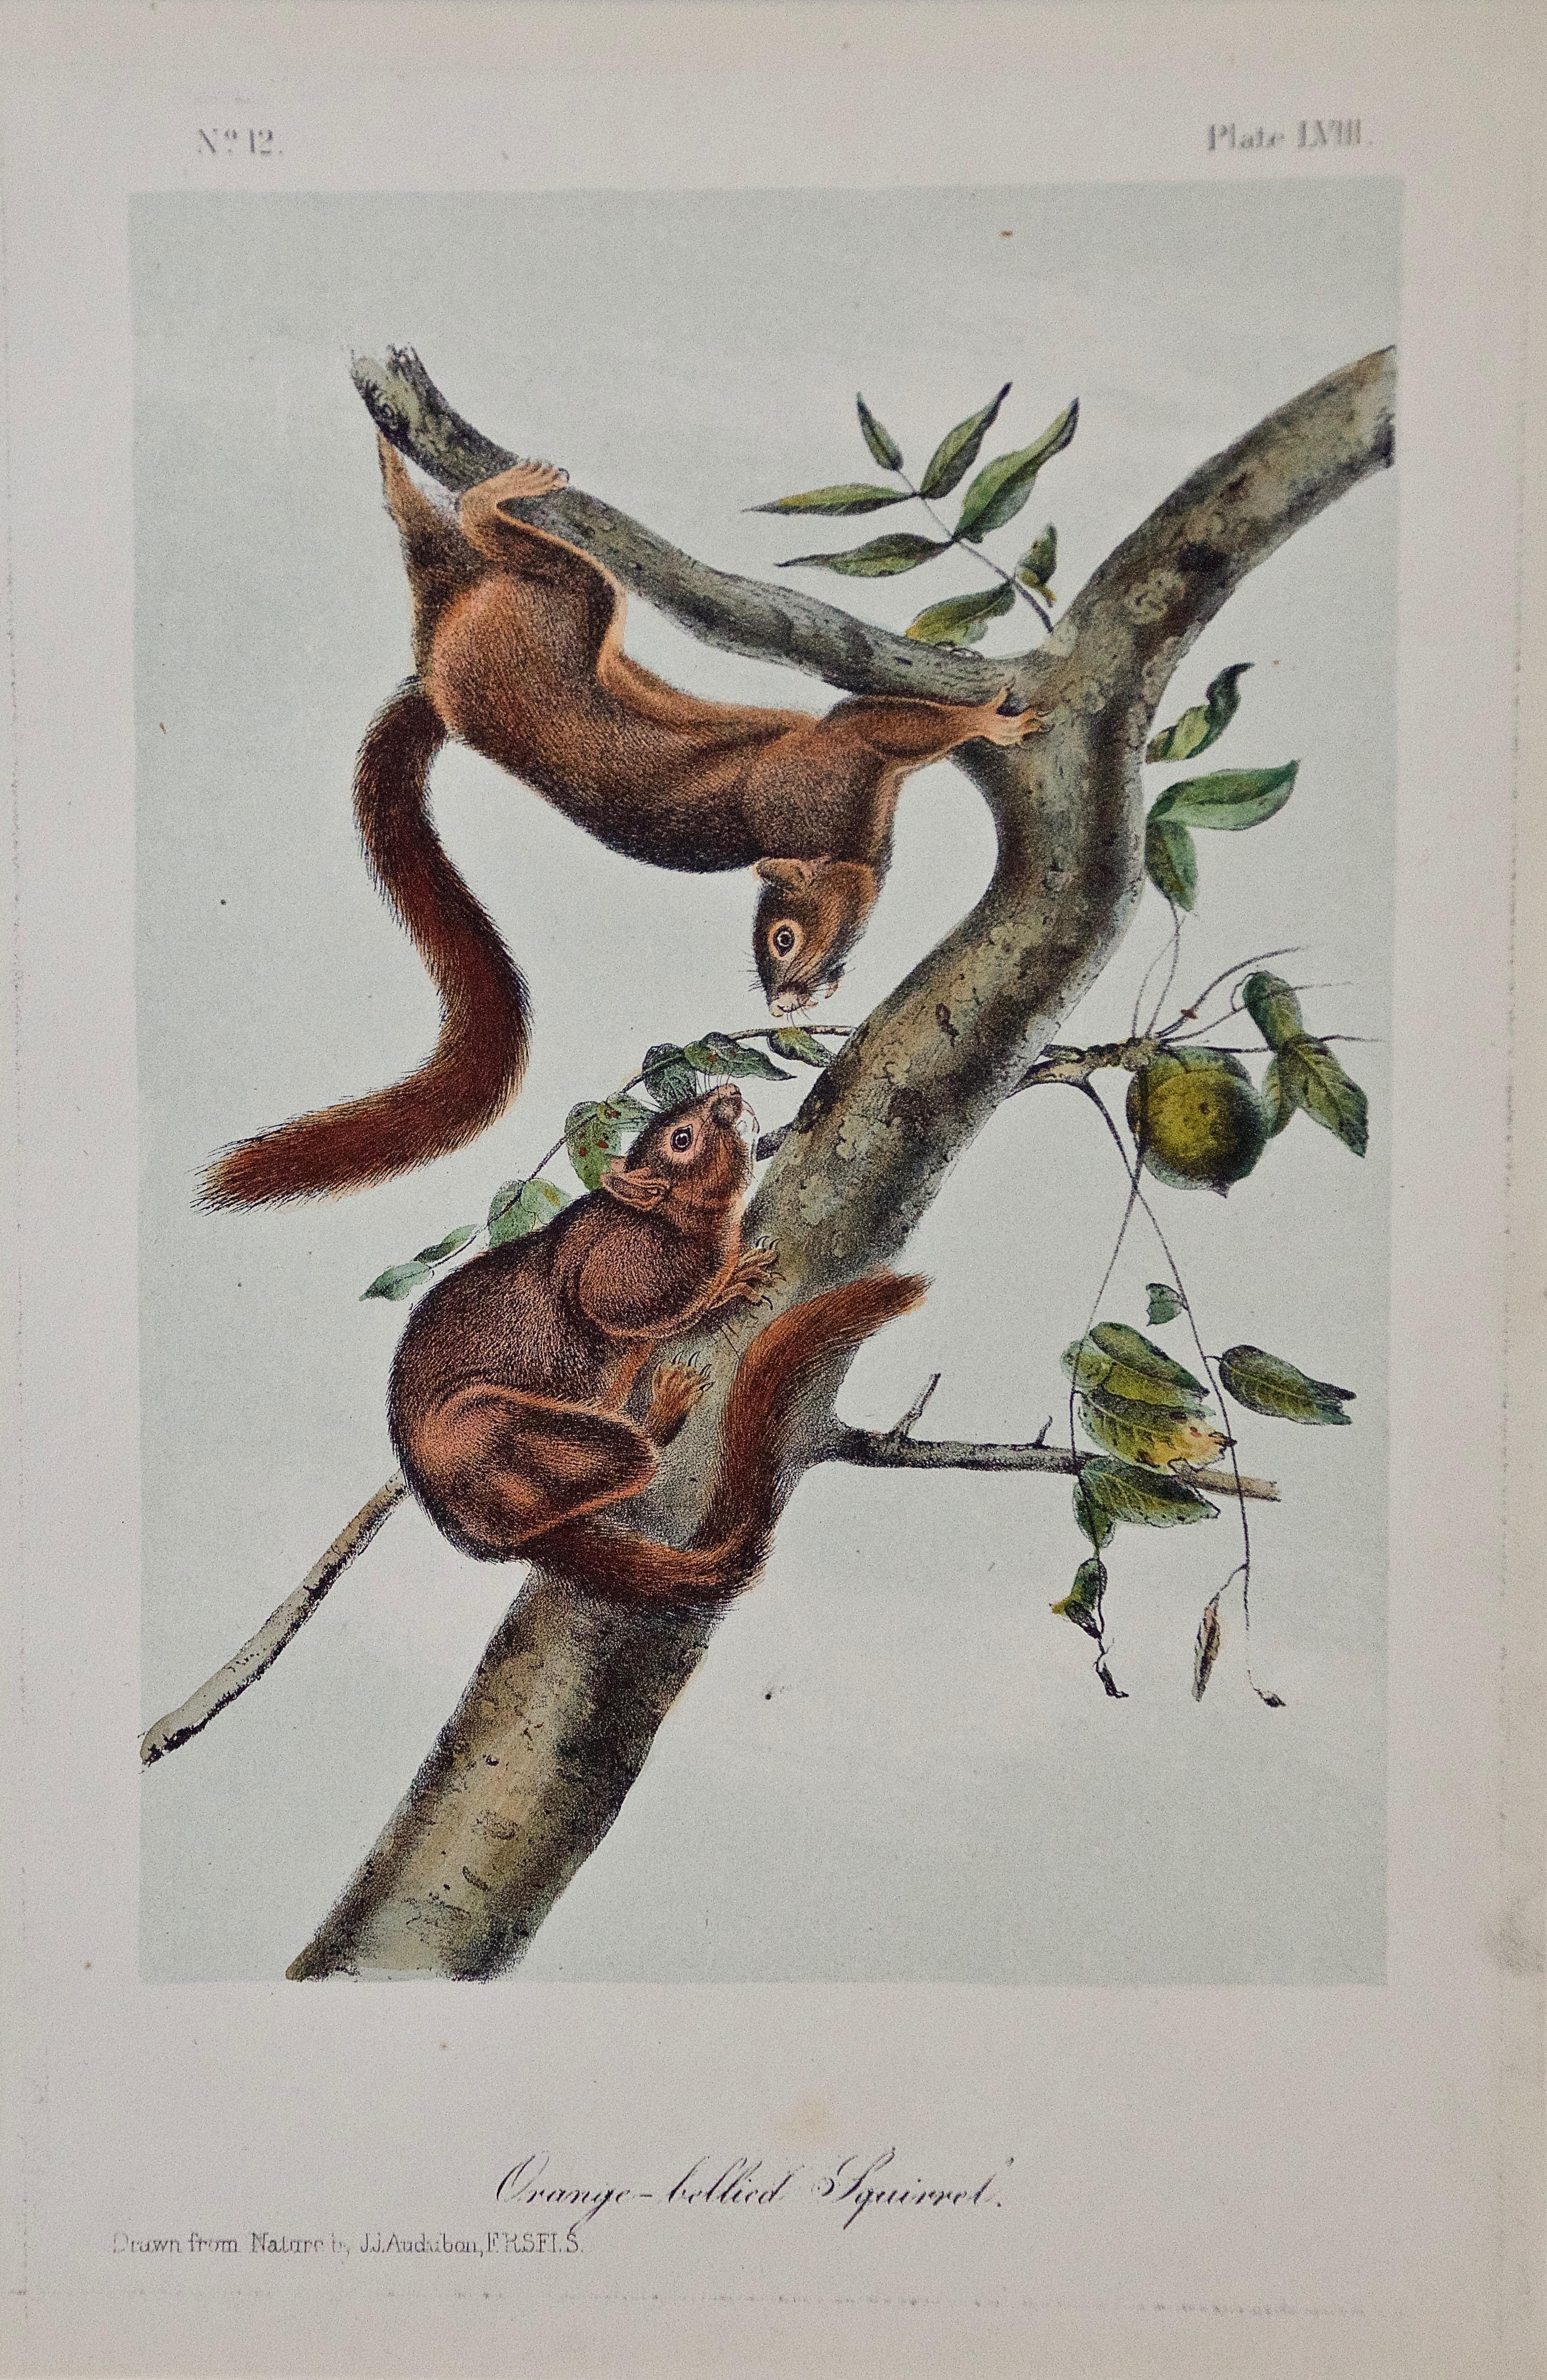 John James Audubon Animal Print - Original Audubon Hand Colored Lithograph of "Orange-bellied Squirrel"